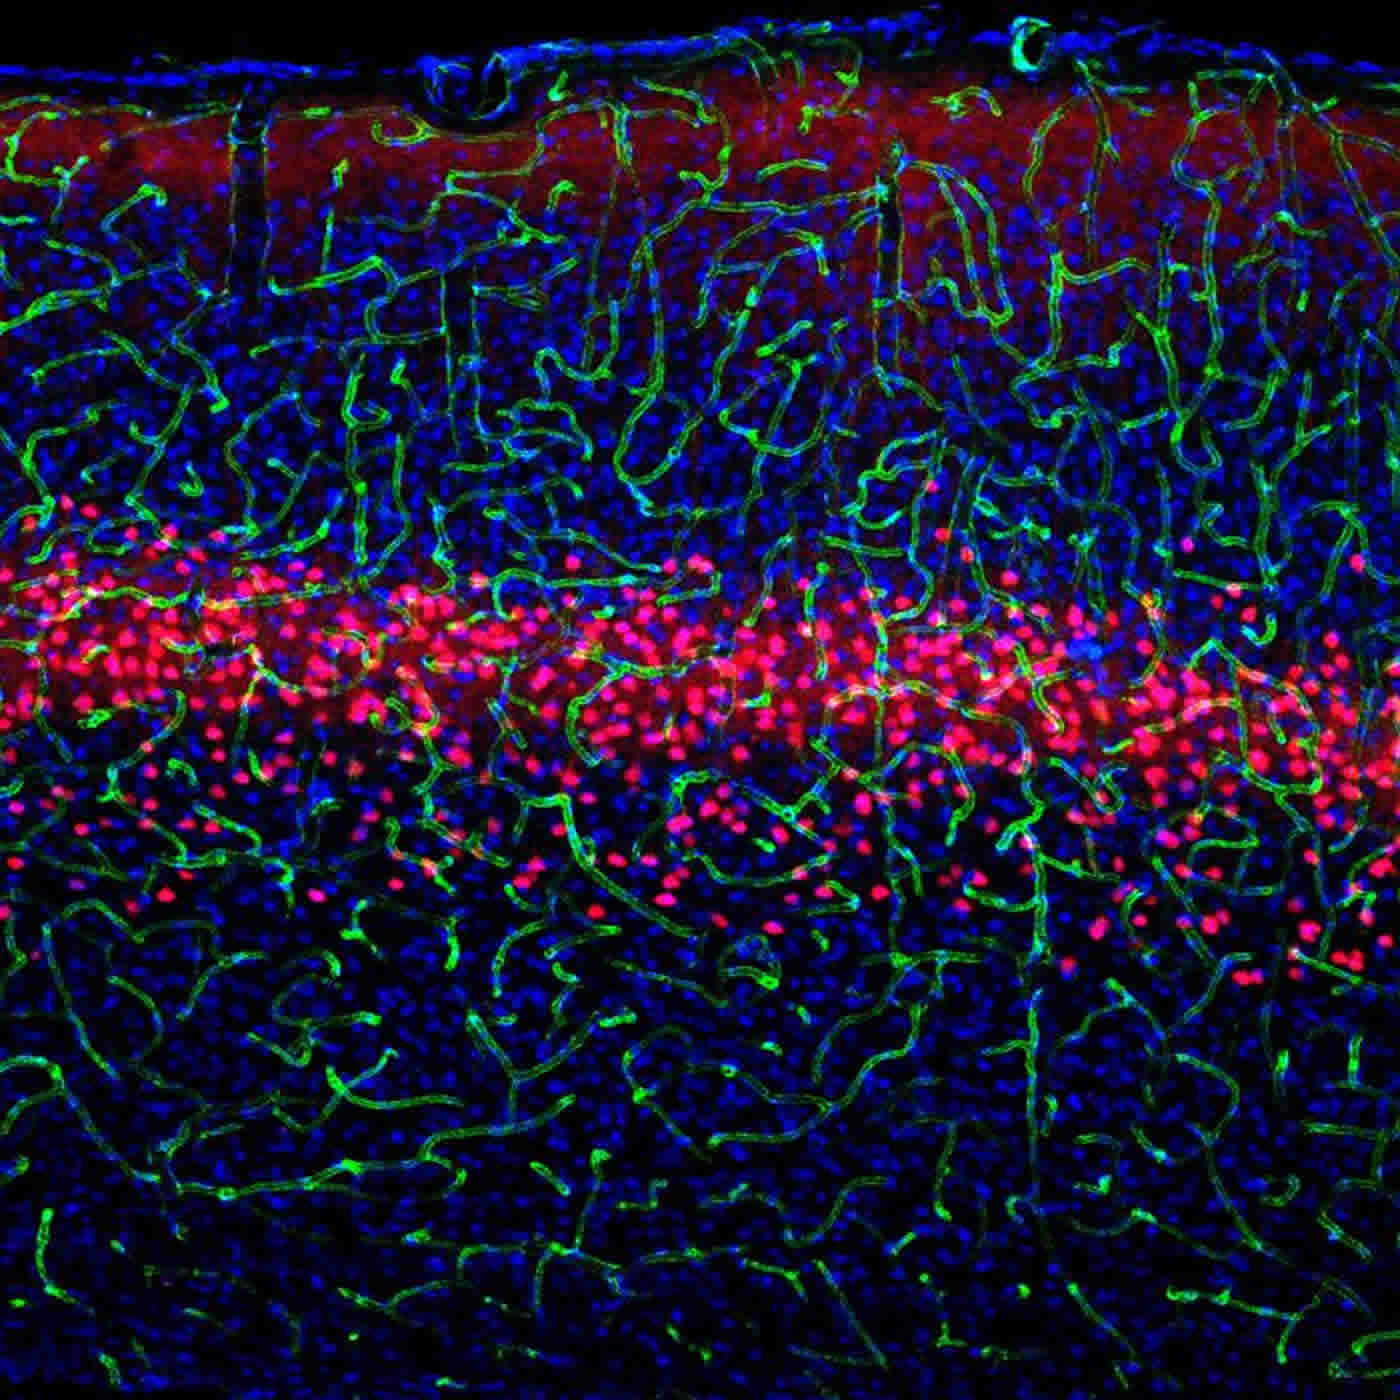 Image of visual cortex neurons.